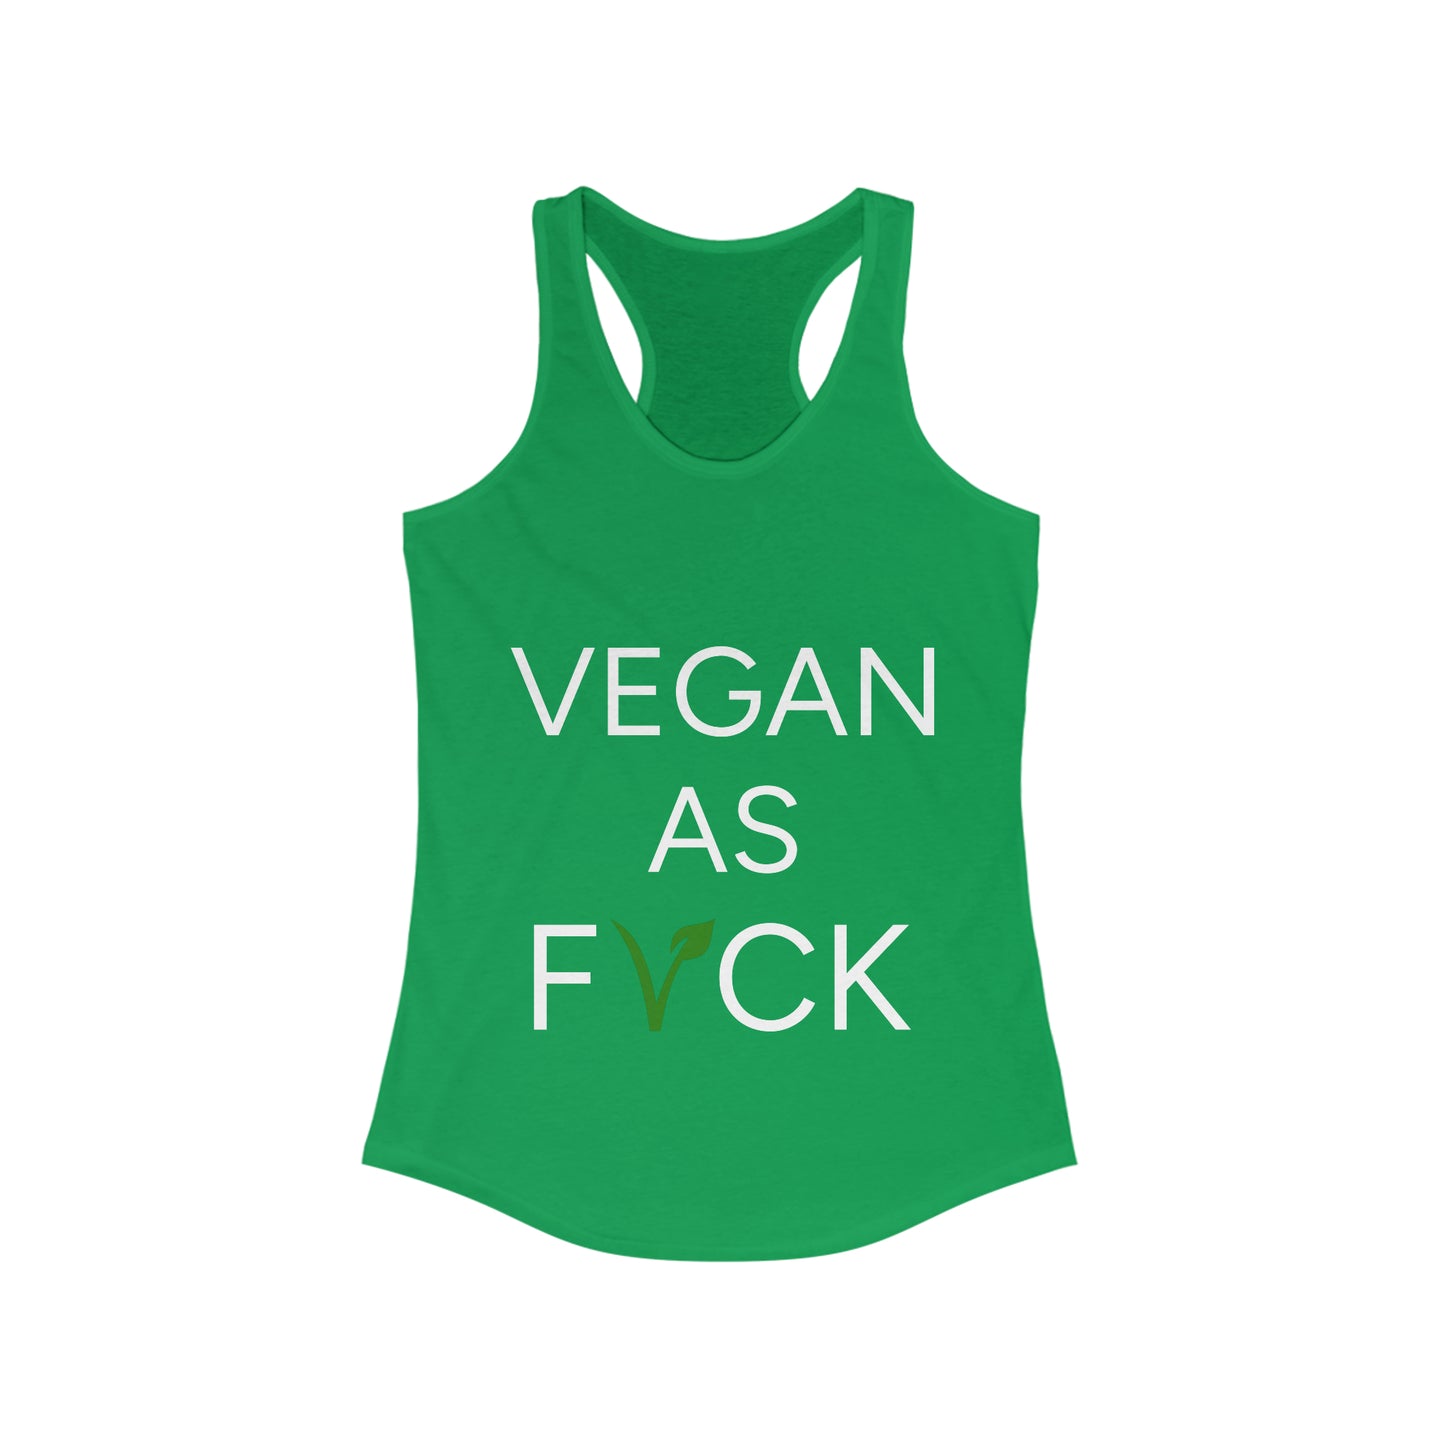 Vegan As Fvck - Women's Ideal Racerback Tank